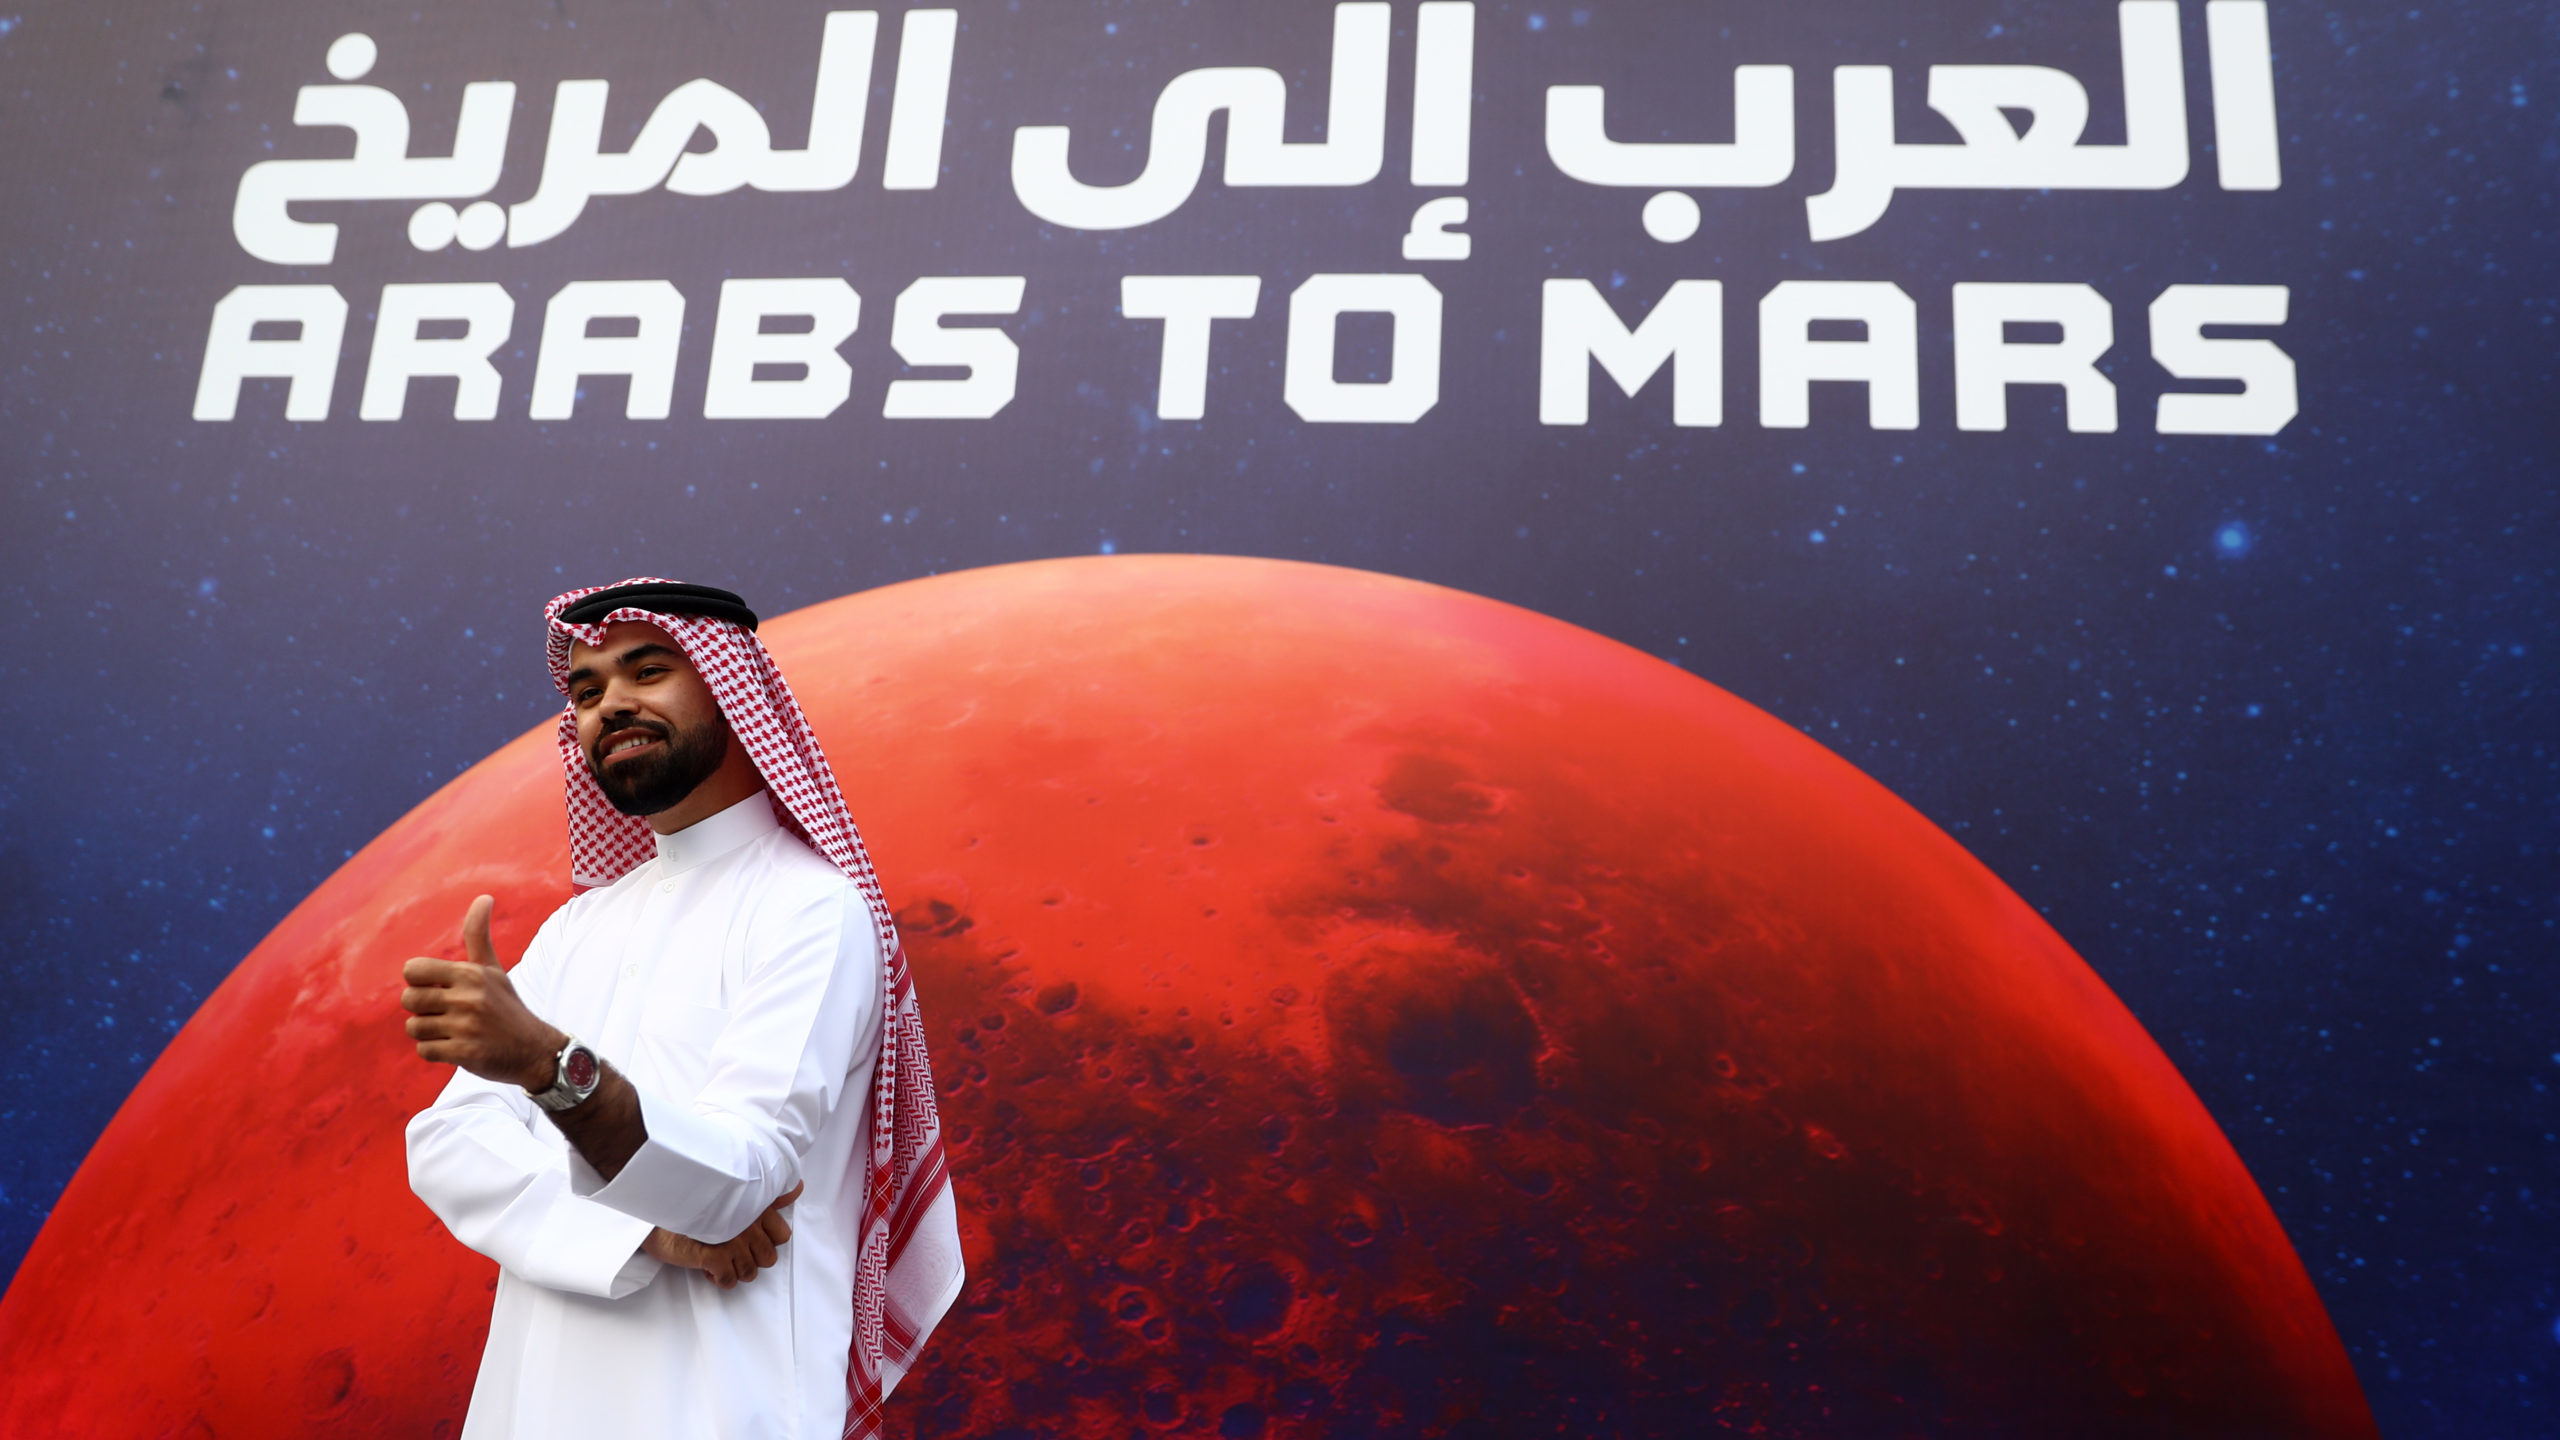 UAE’s Hope Mars Probe Enters Red Planet’s Orbit